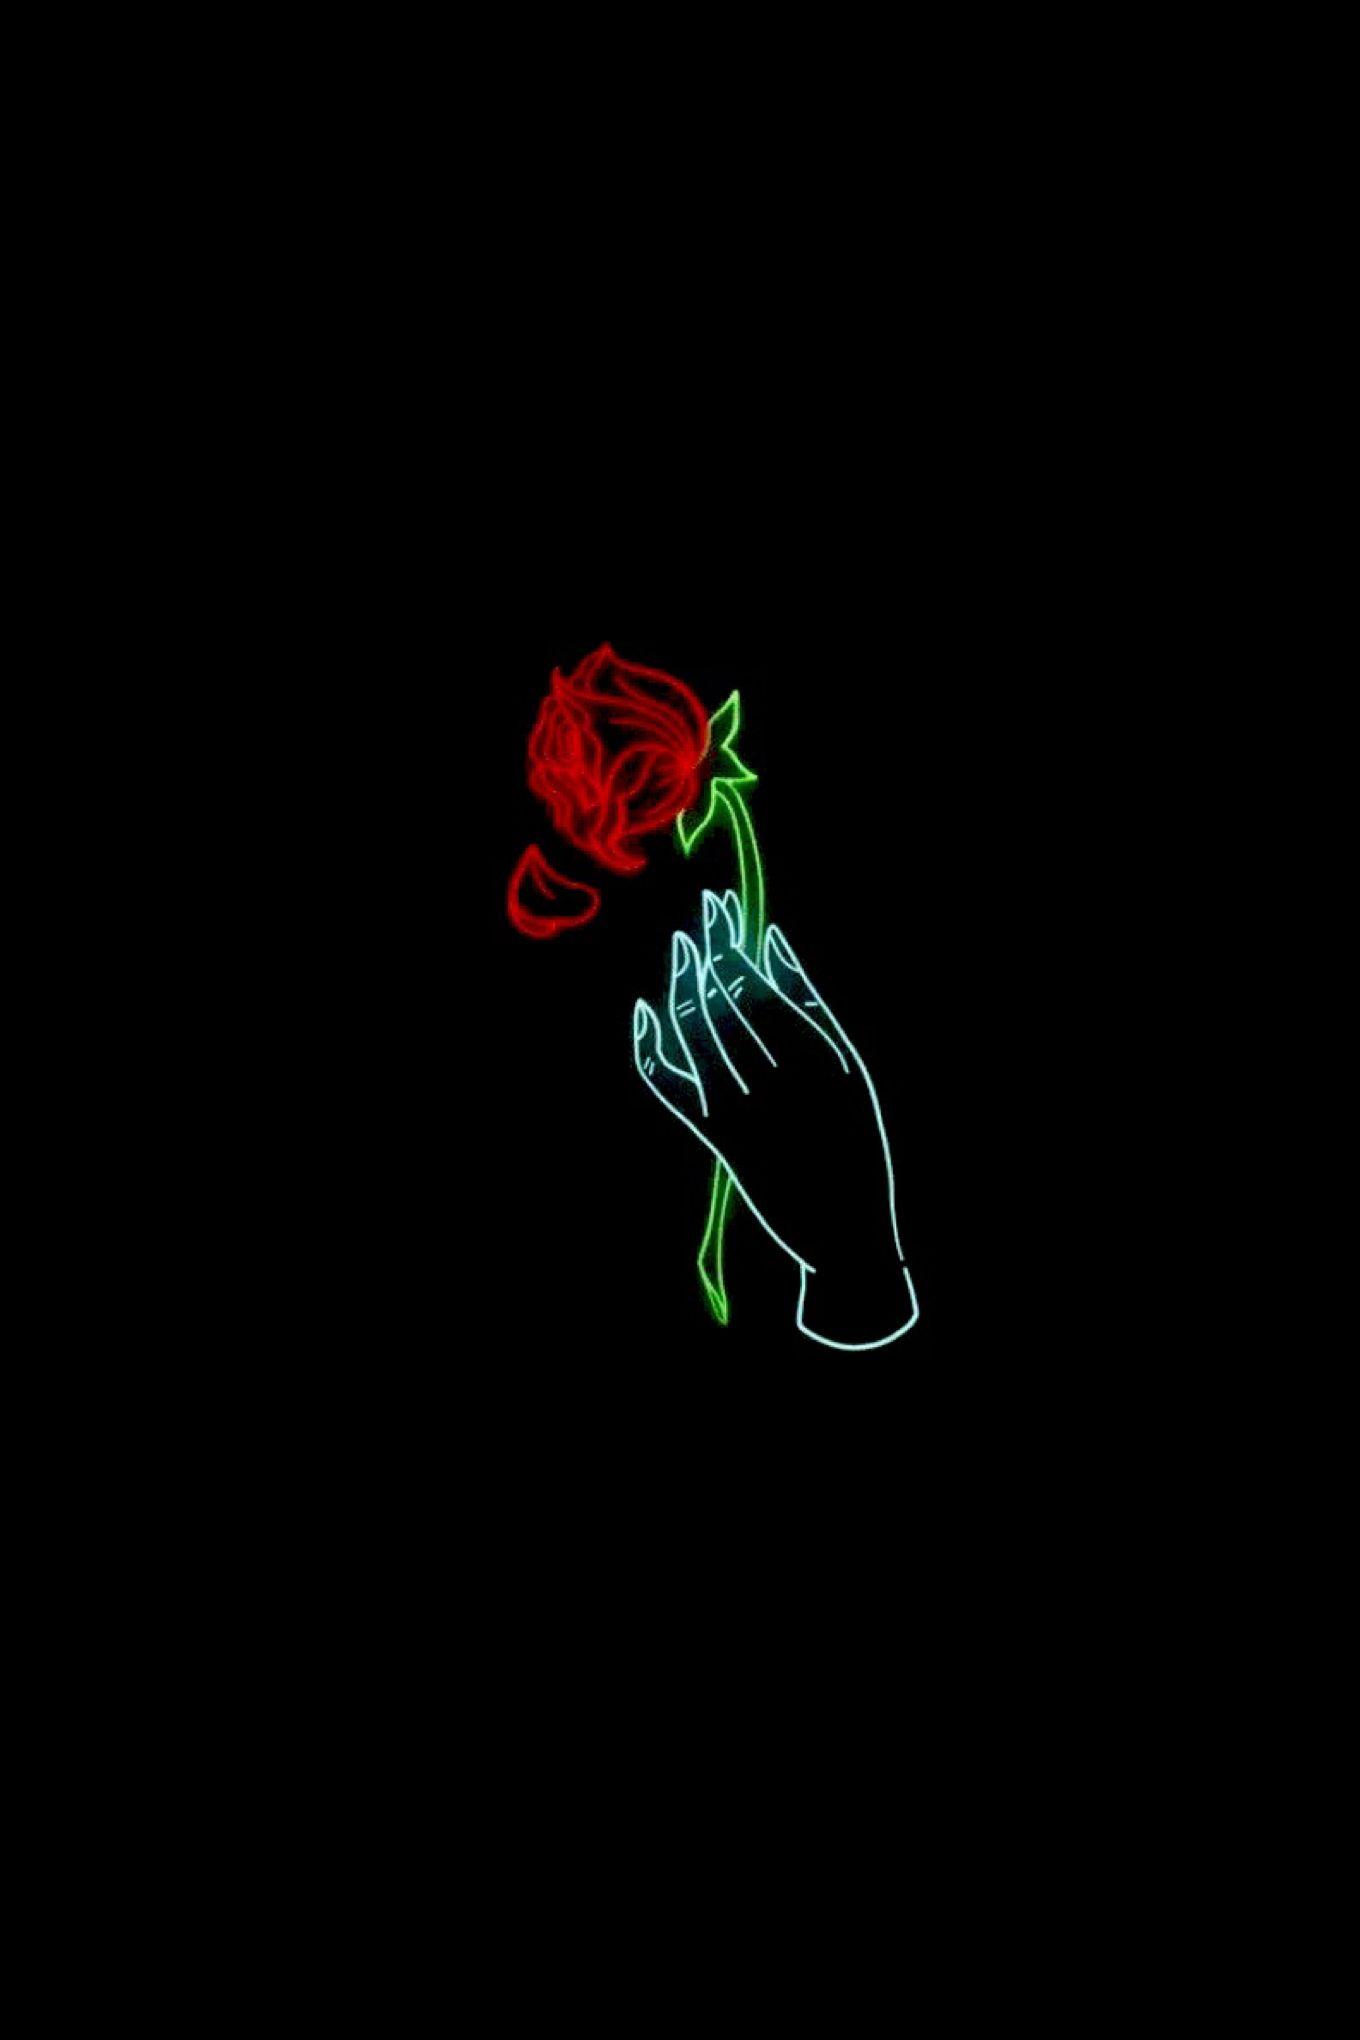 Aesthetic neon red rose wallpaper for phone background. - Black rose